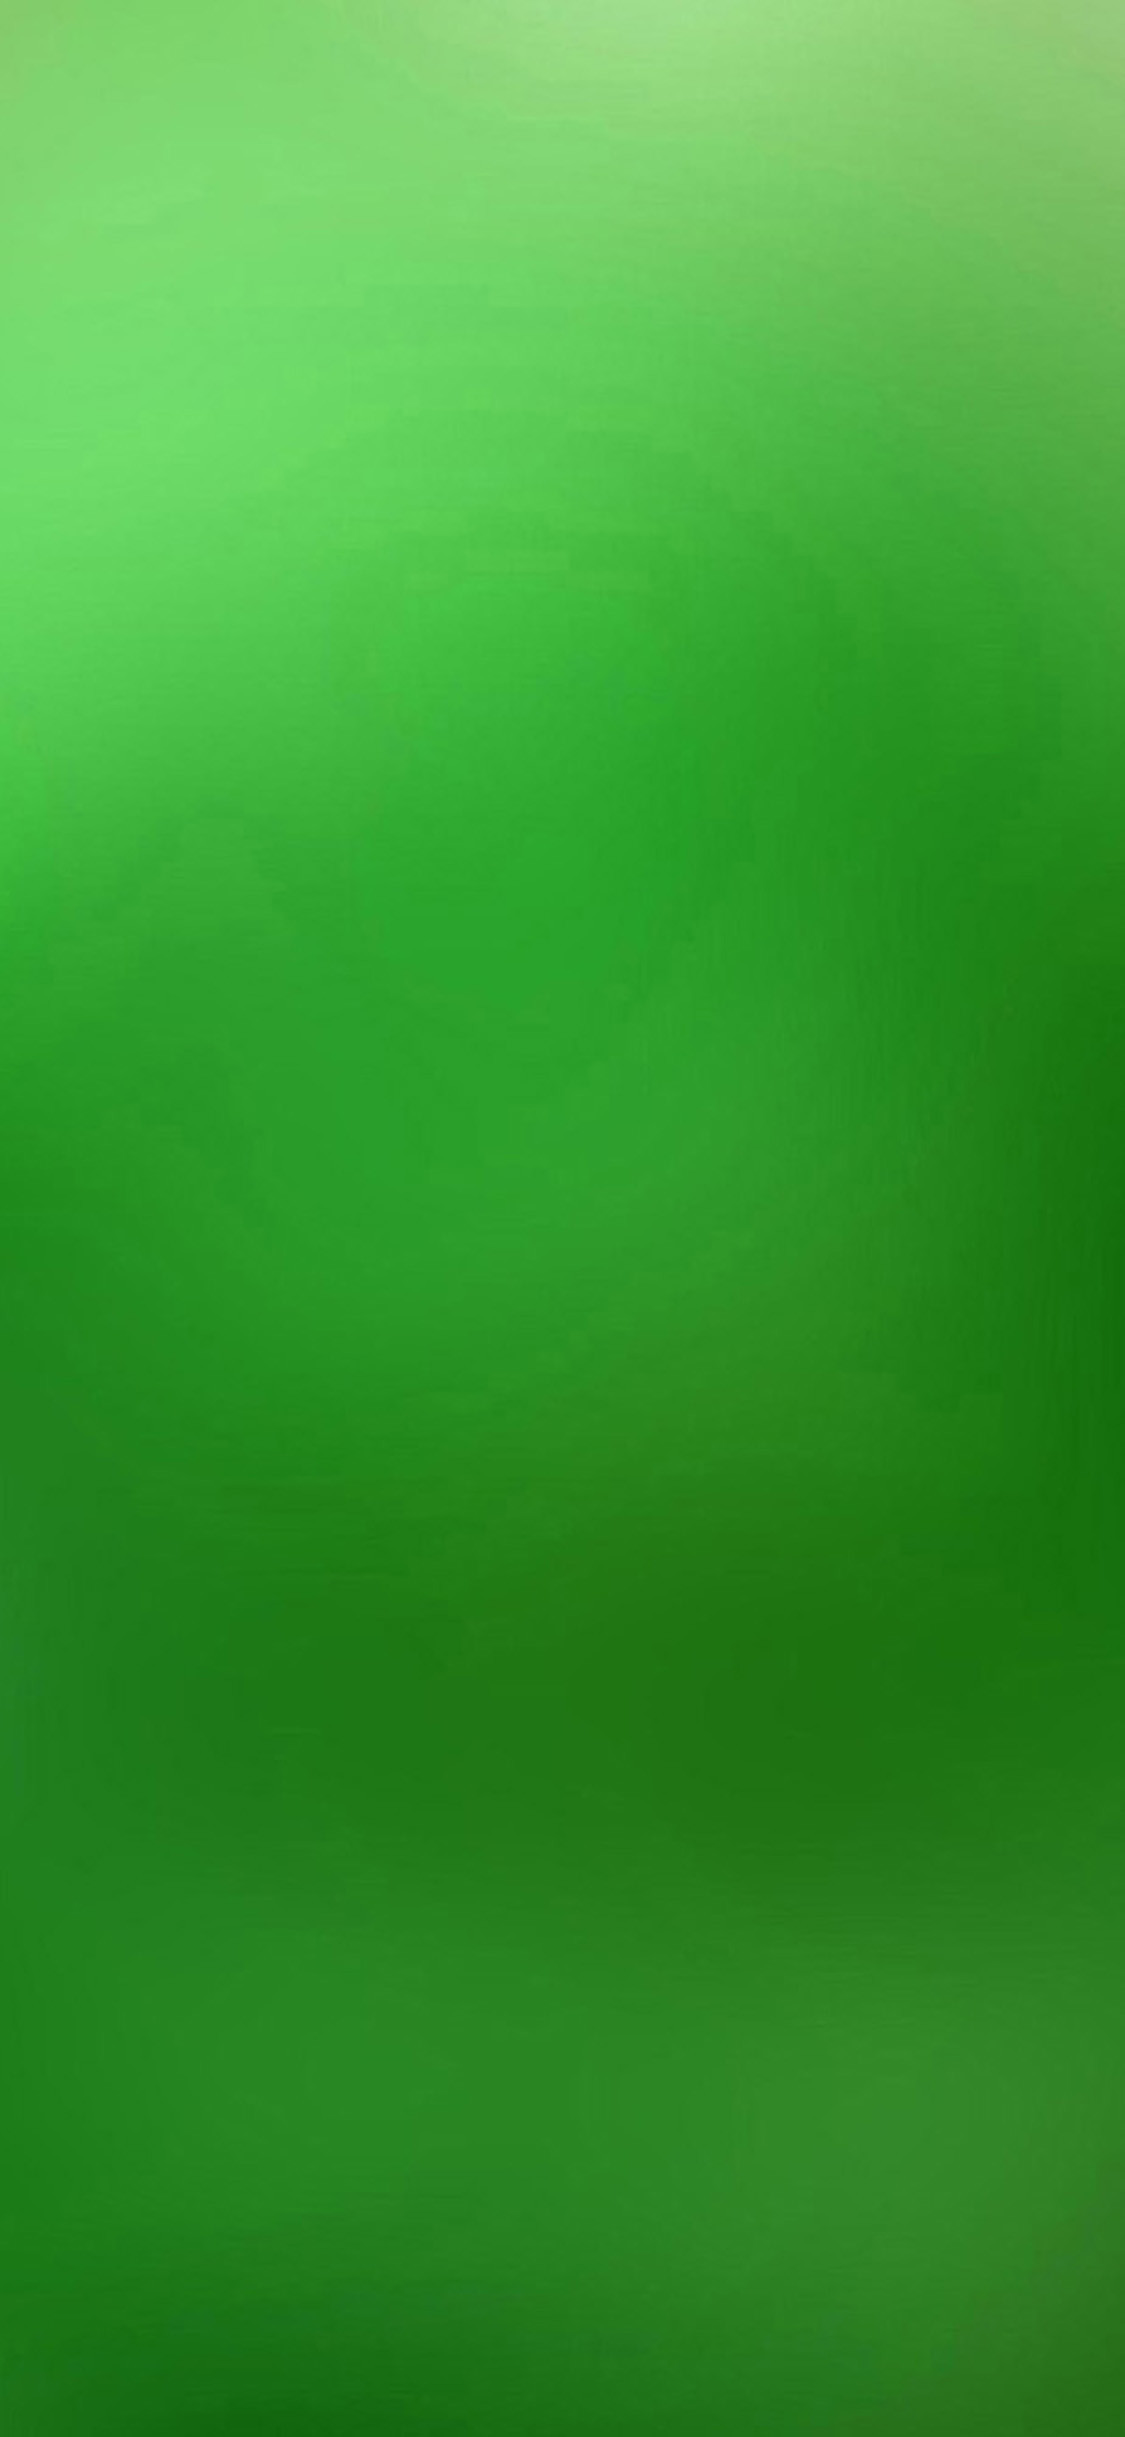 1125x2437 Simple dark green background iPhone X Wallpaper